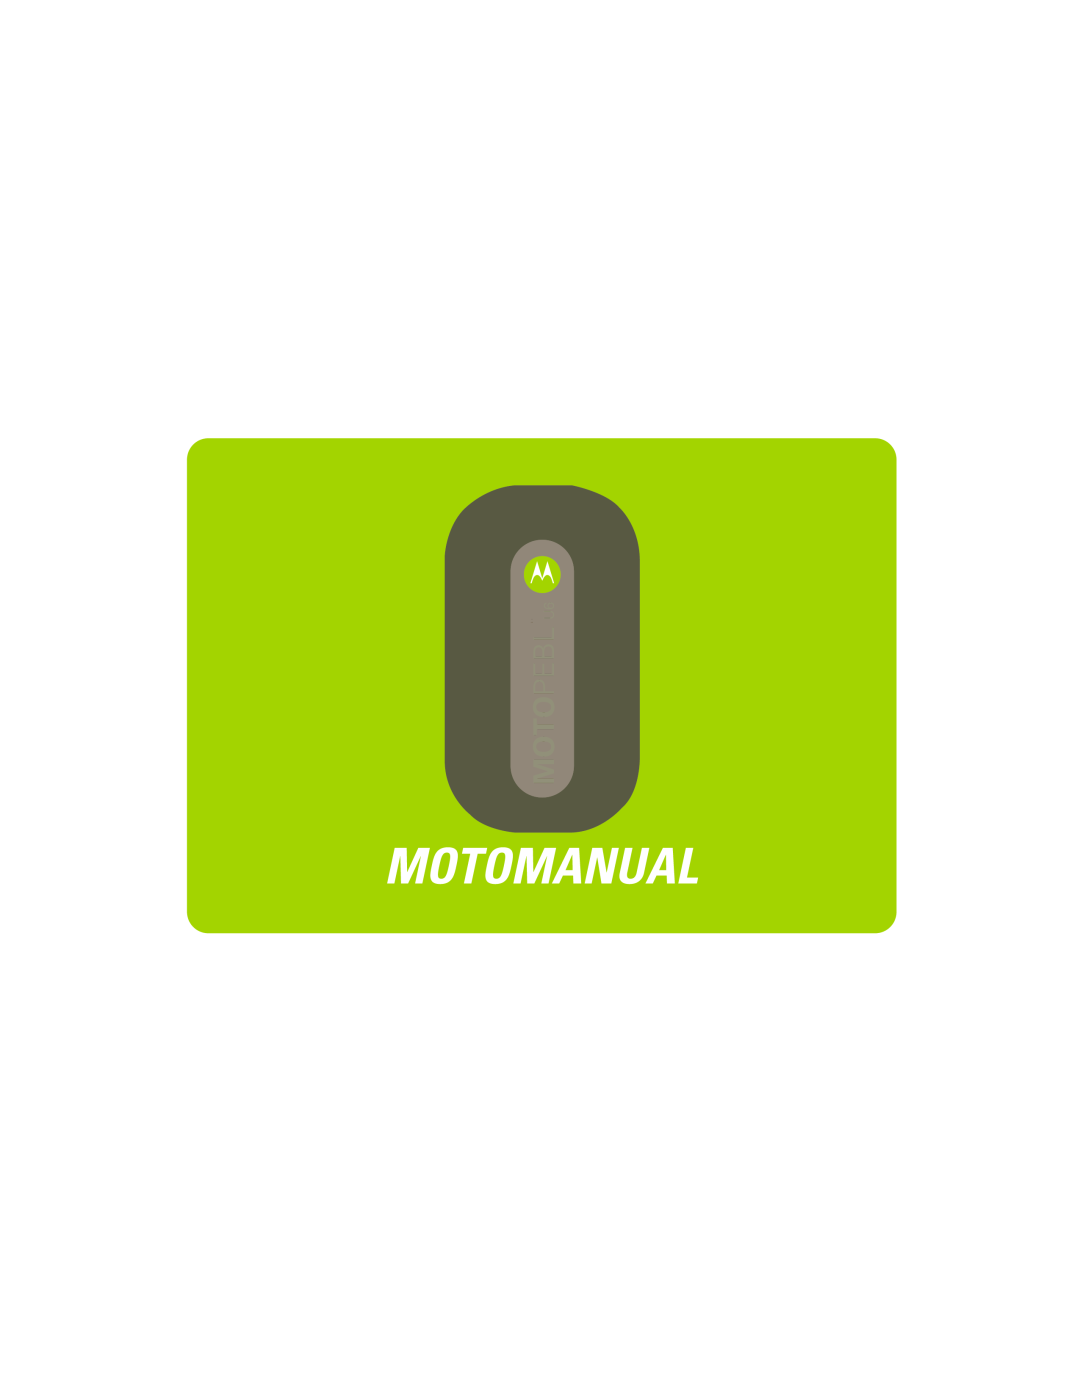 Motorola U6 manual Motomanual 